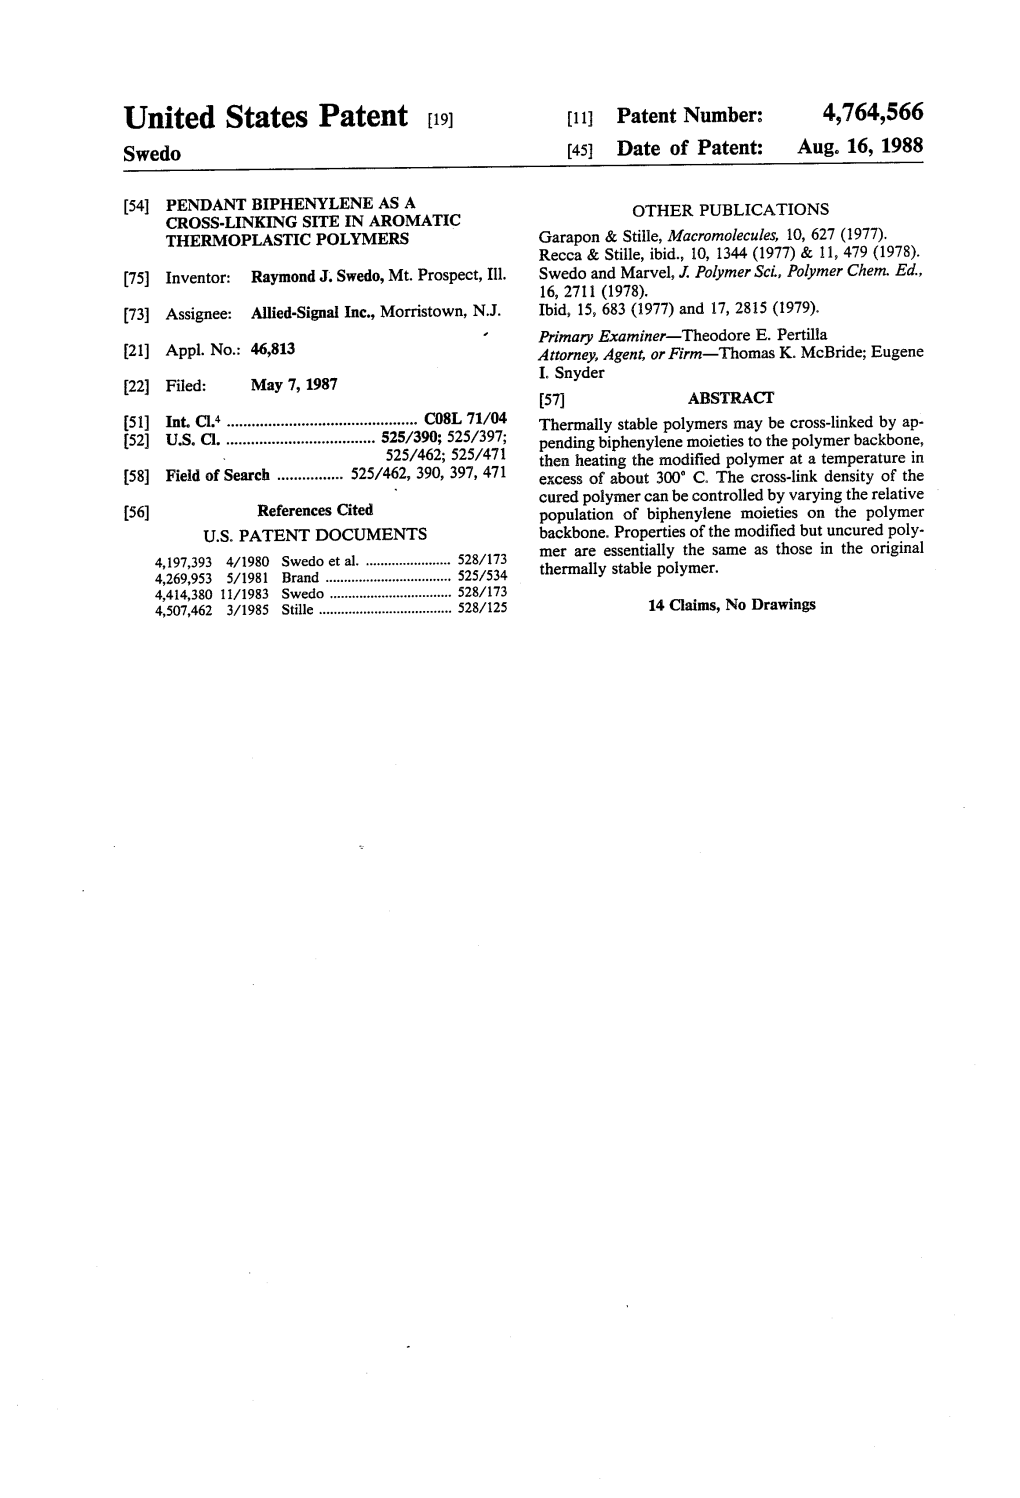 United States Patent (19) 11 Patent Number: 4,764,566 Swedo (45